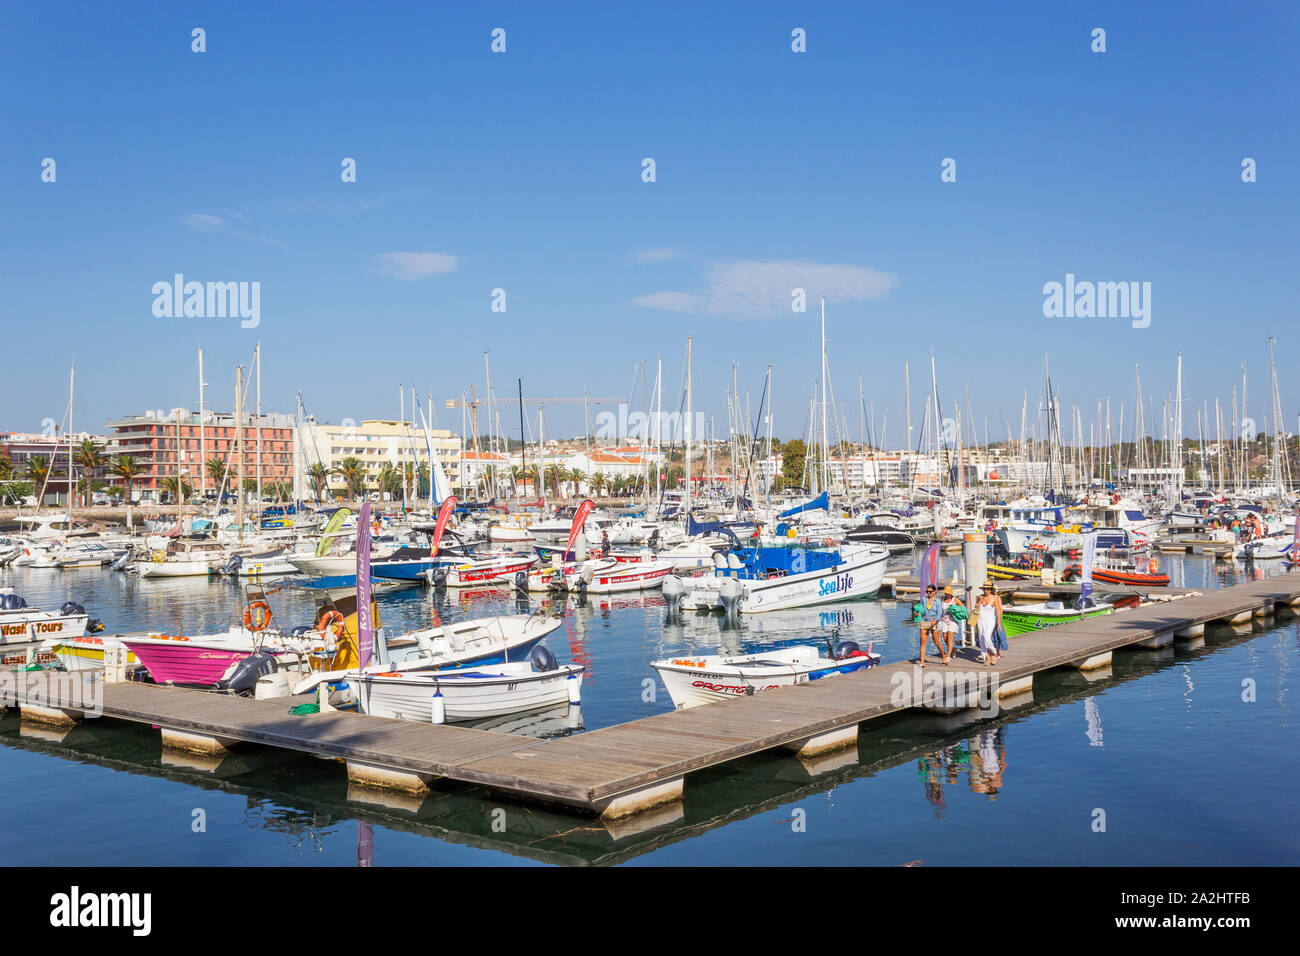 Marina de Lagos, Lagos, Algarve, Portugal. Small boats moored in the marina. Stock Photo